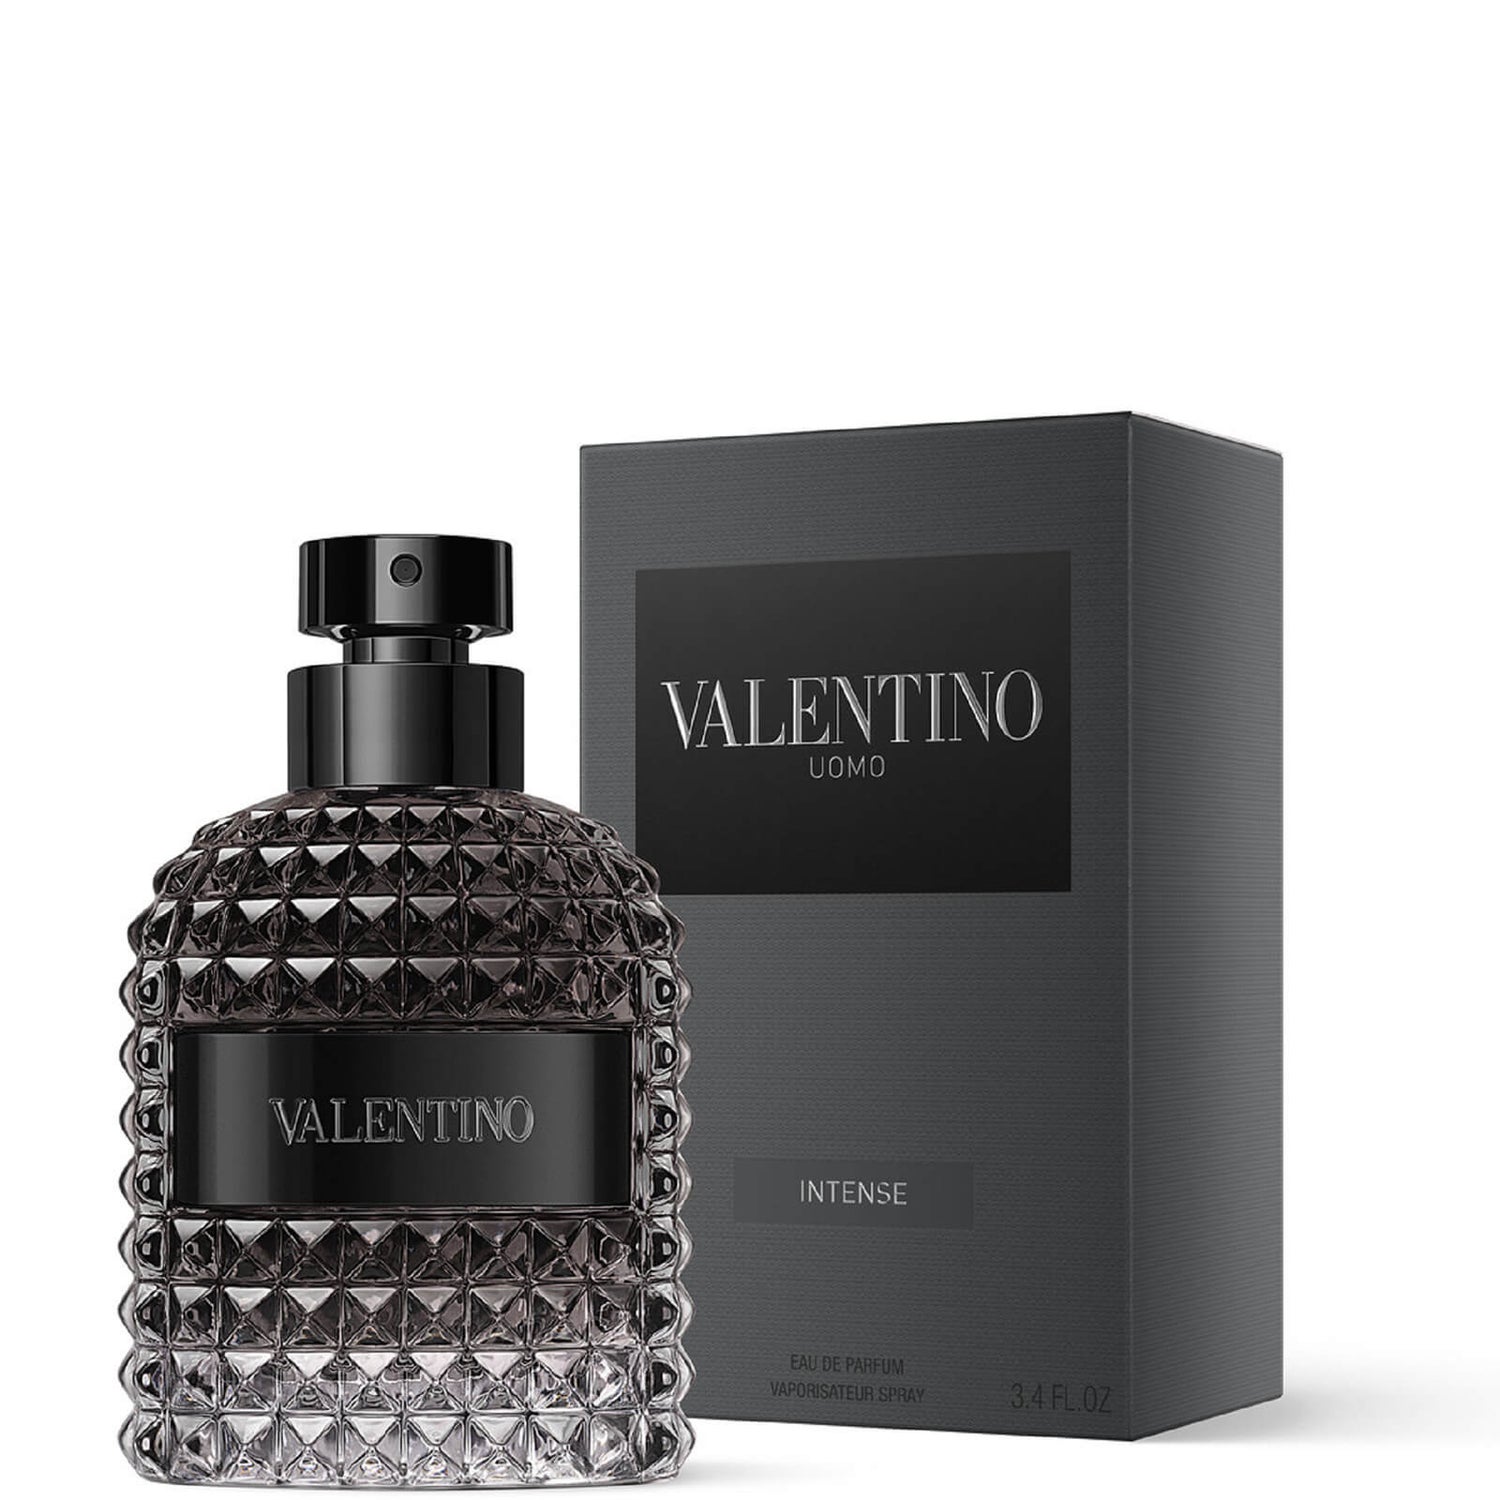 Valentino Intense Eau de Parfum - 100ml - lookfantastic